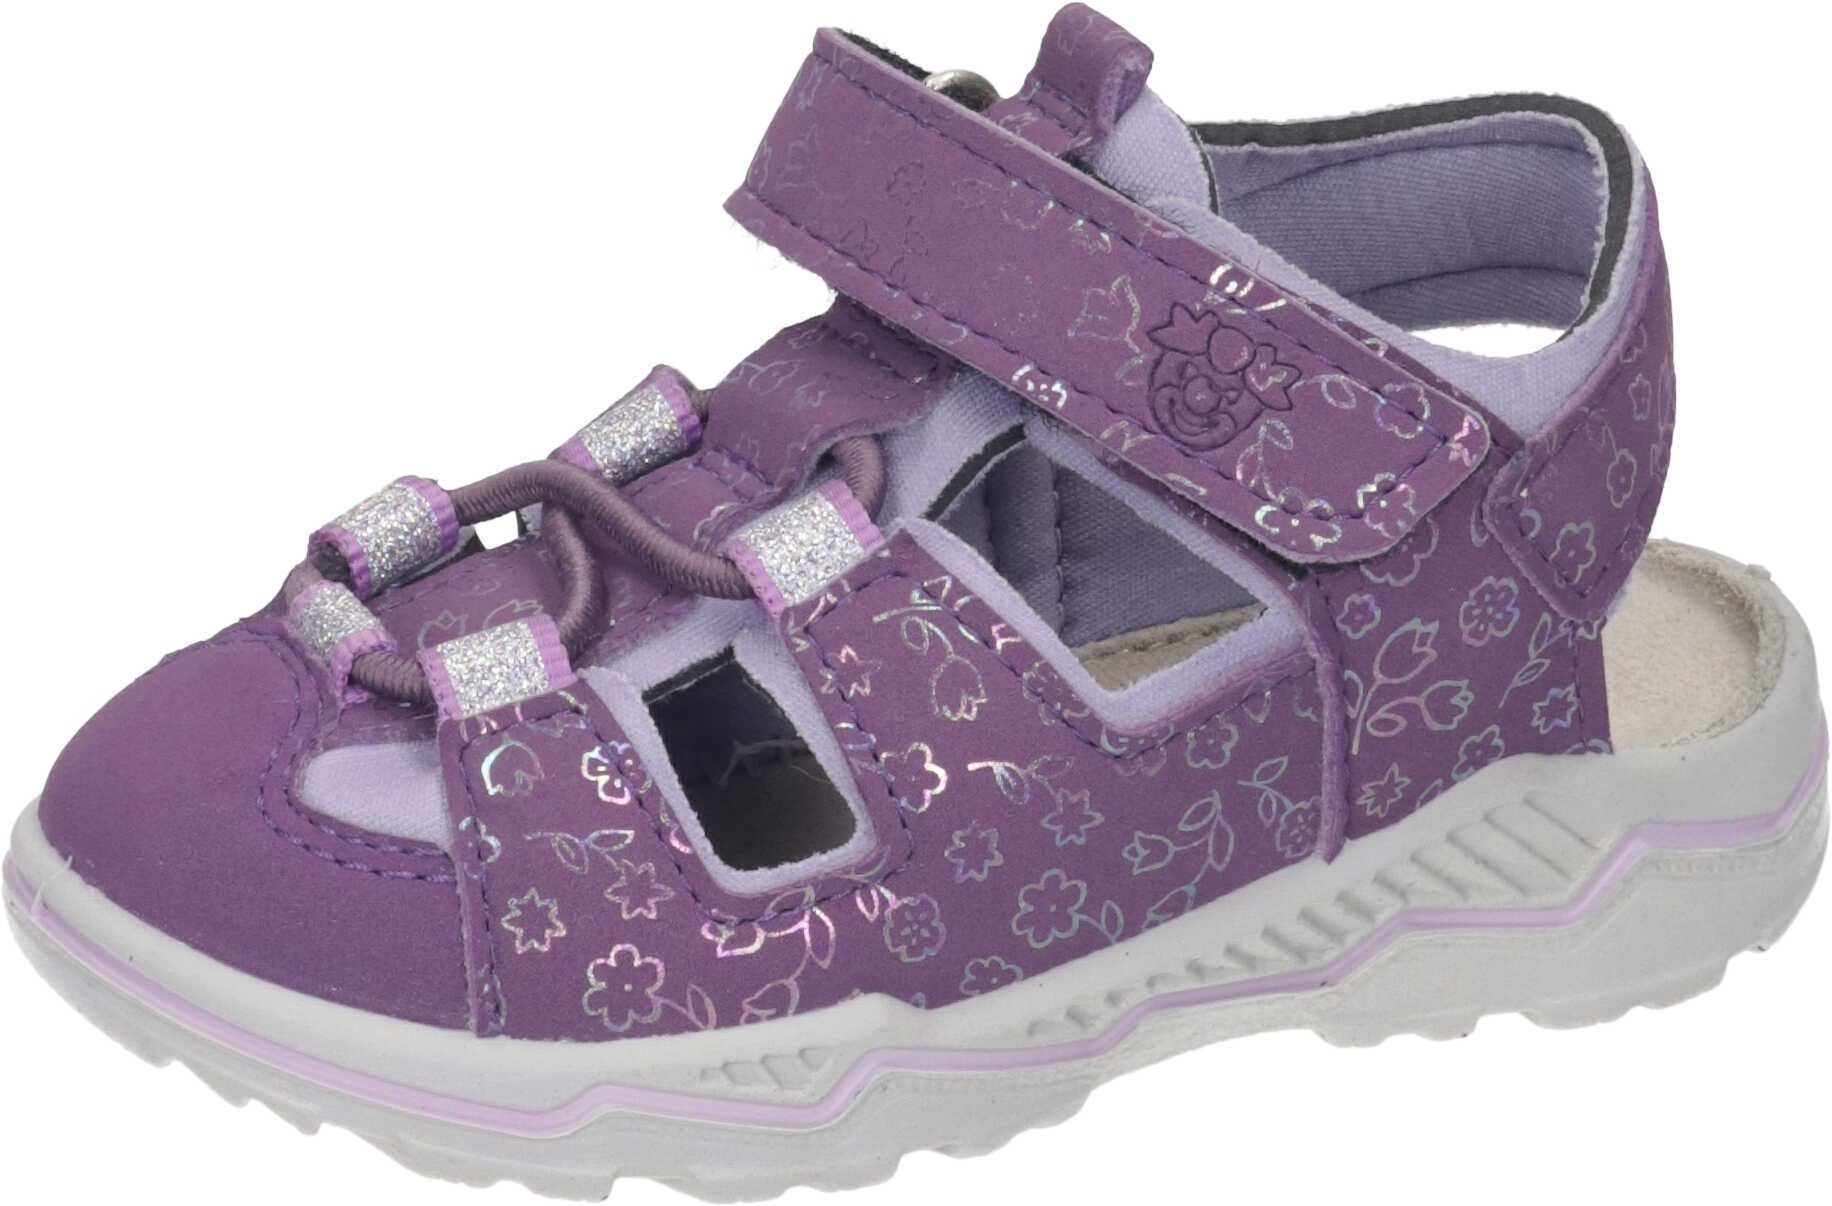 Pepino aus Outdoorsandale Synthetik/Textil Sandaletten Cassis/Lavendel